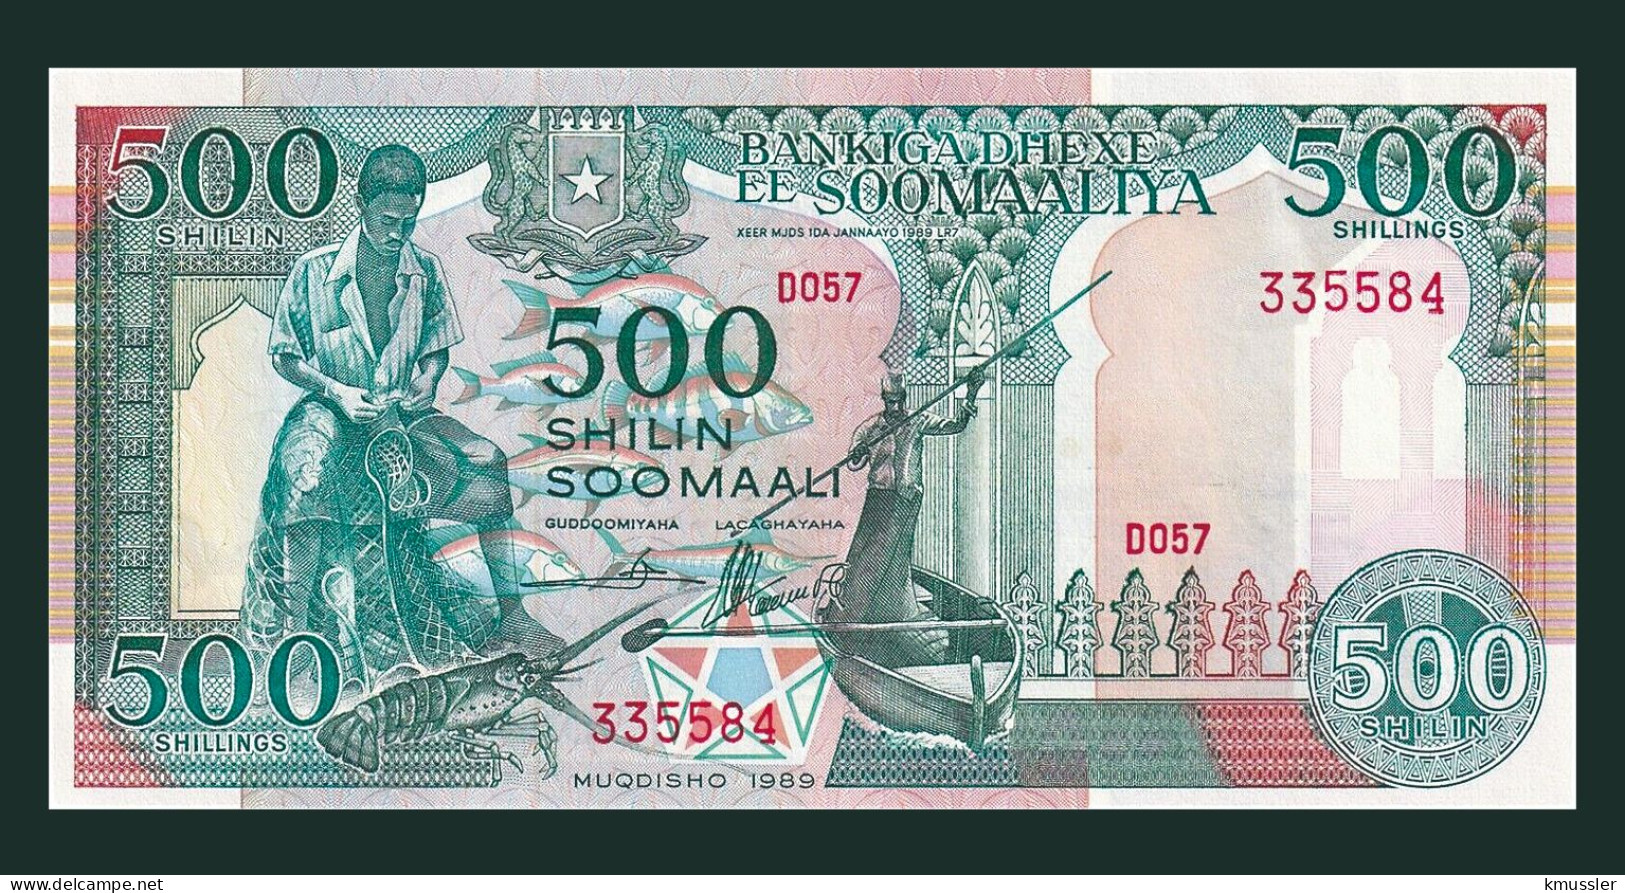 # # # Banknote Aus Somalia 500 Shillings 1989 (P-36) UNC # # # - Somalië